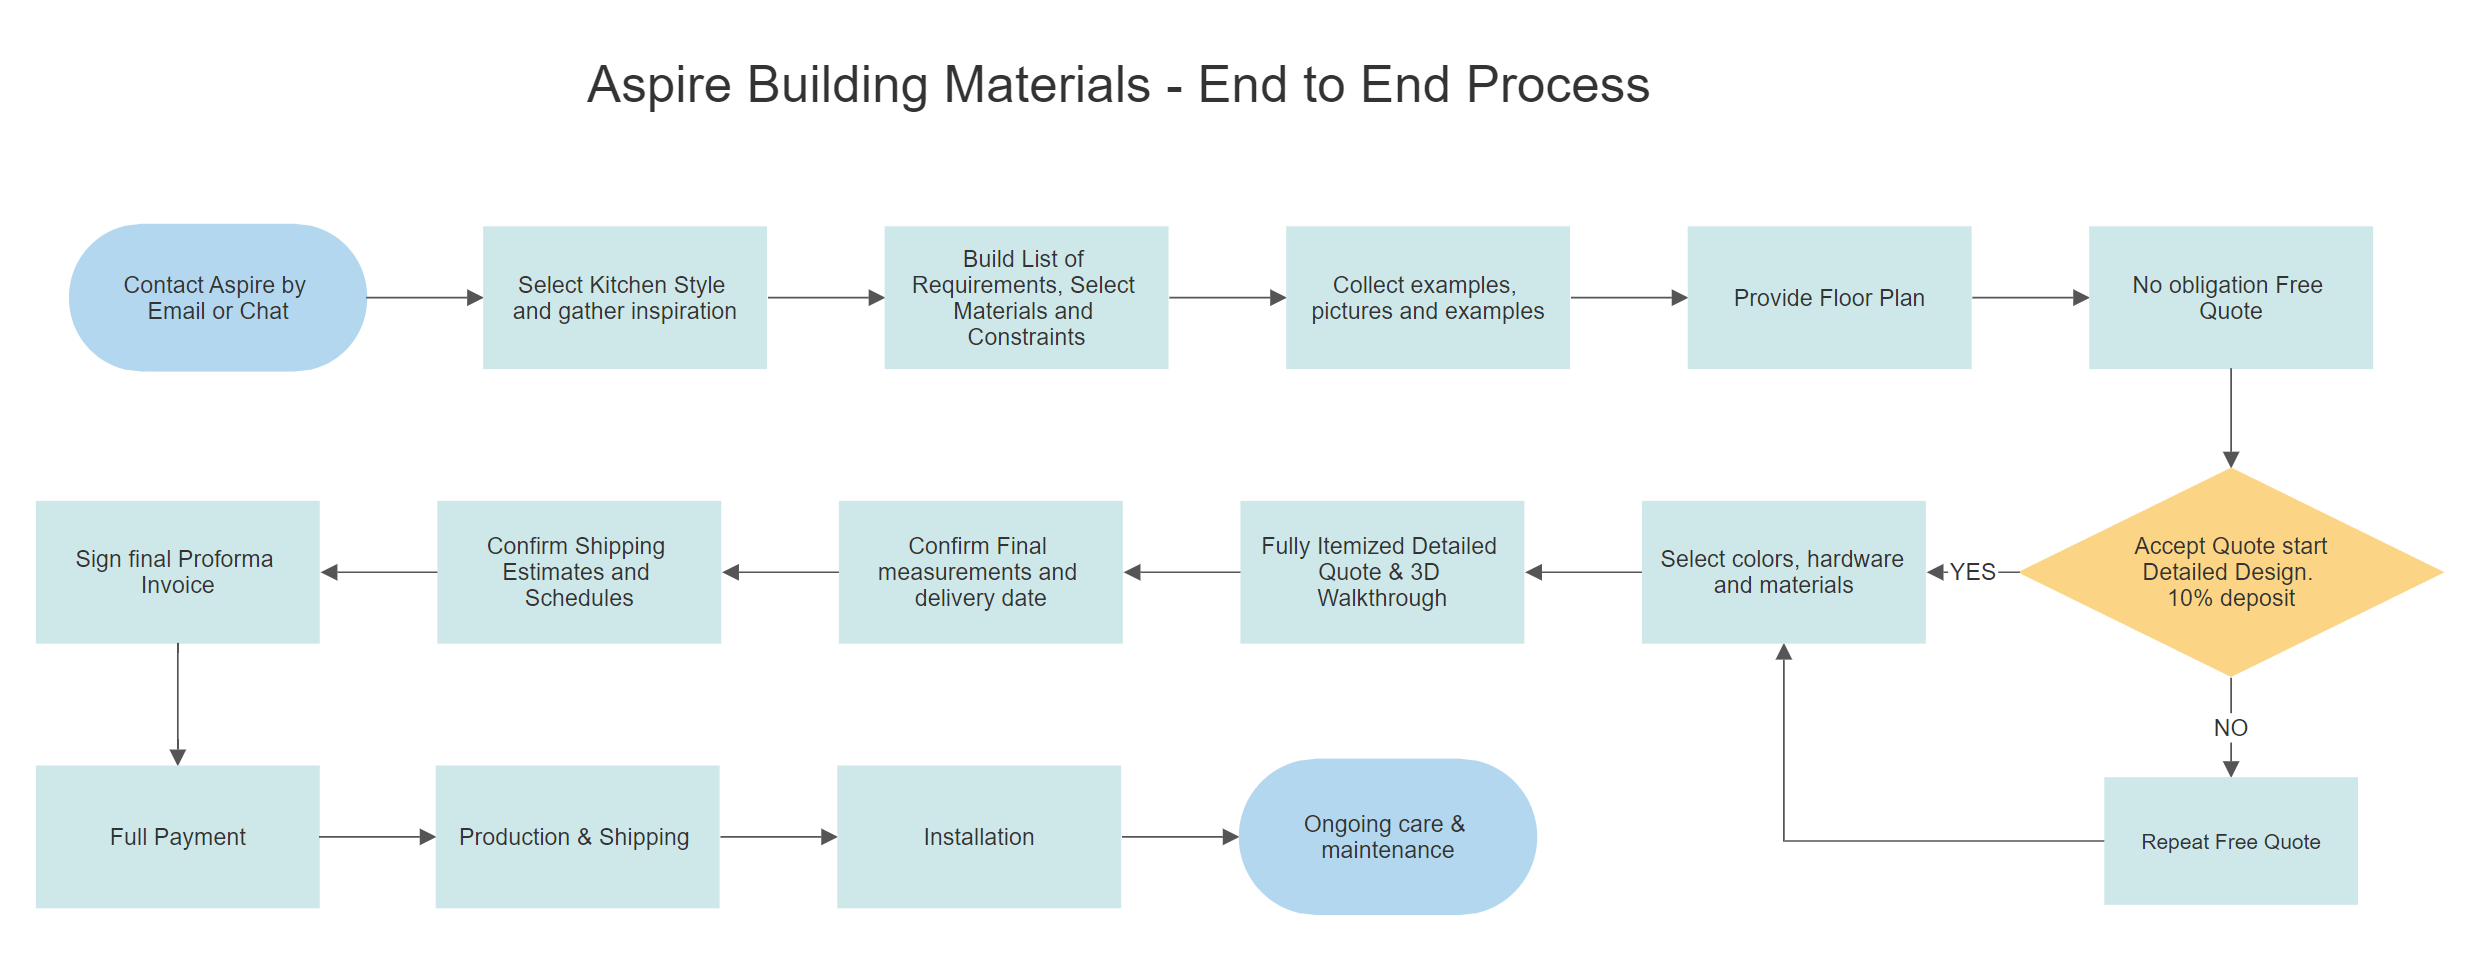 Aspire Building Materials Flowchart